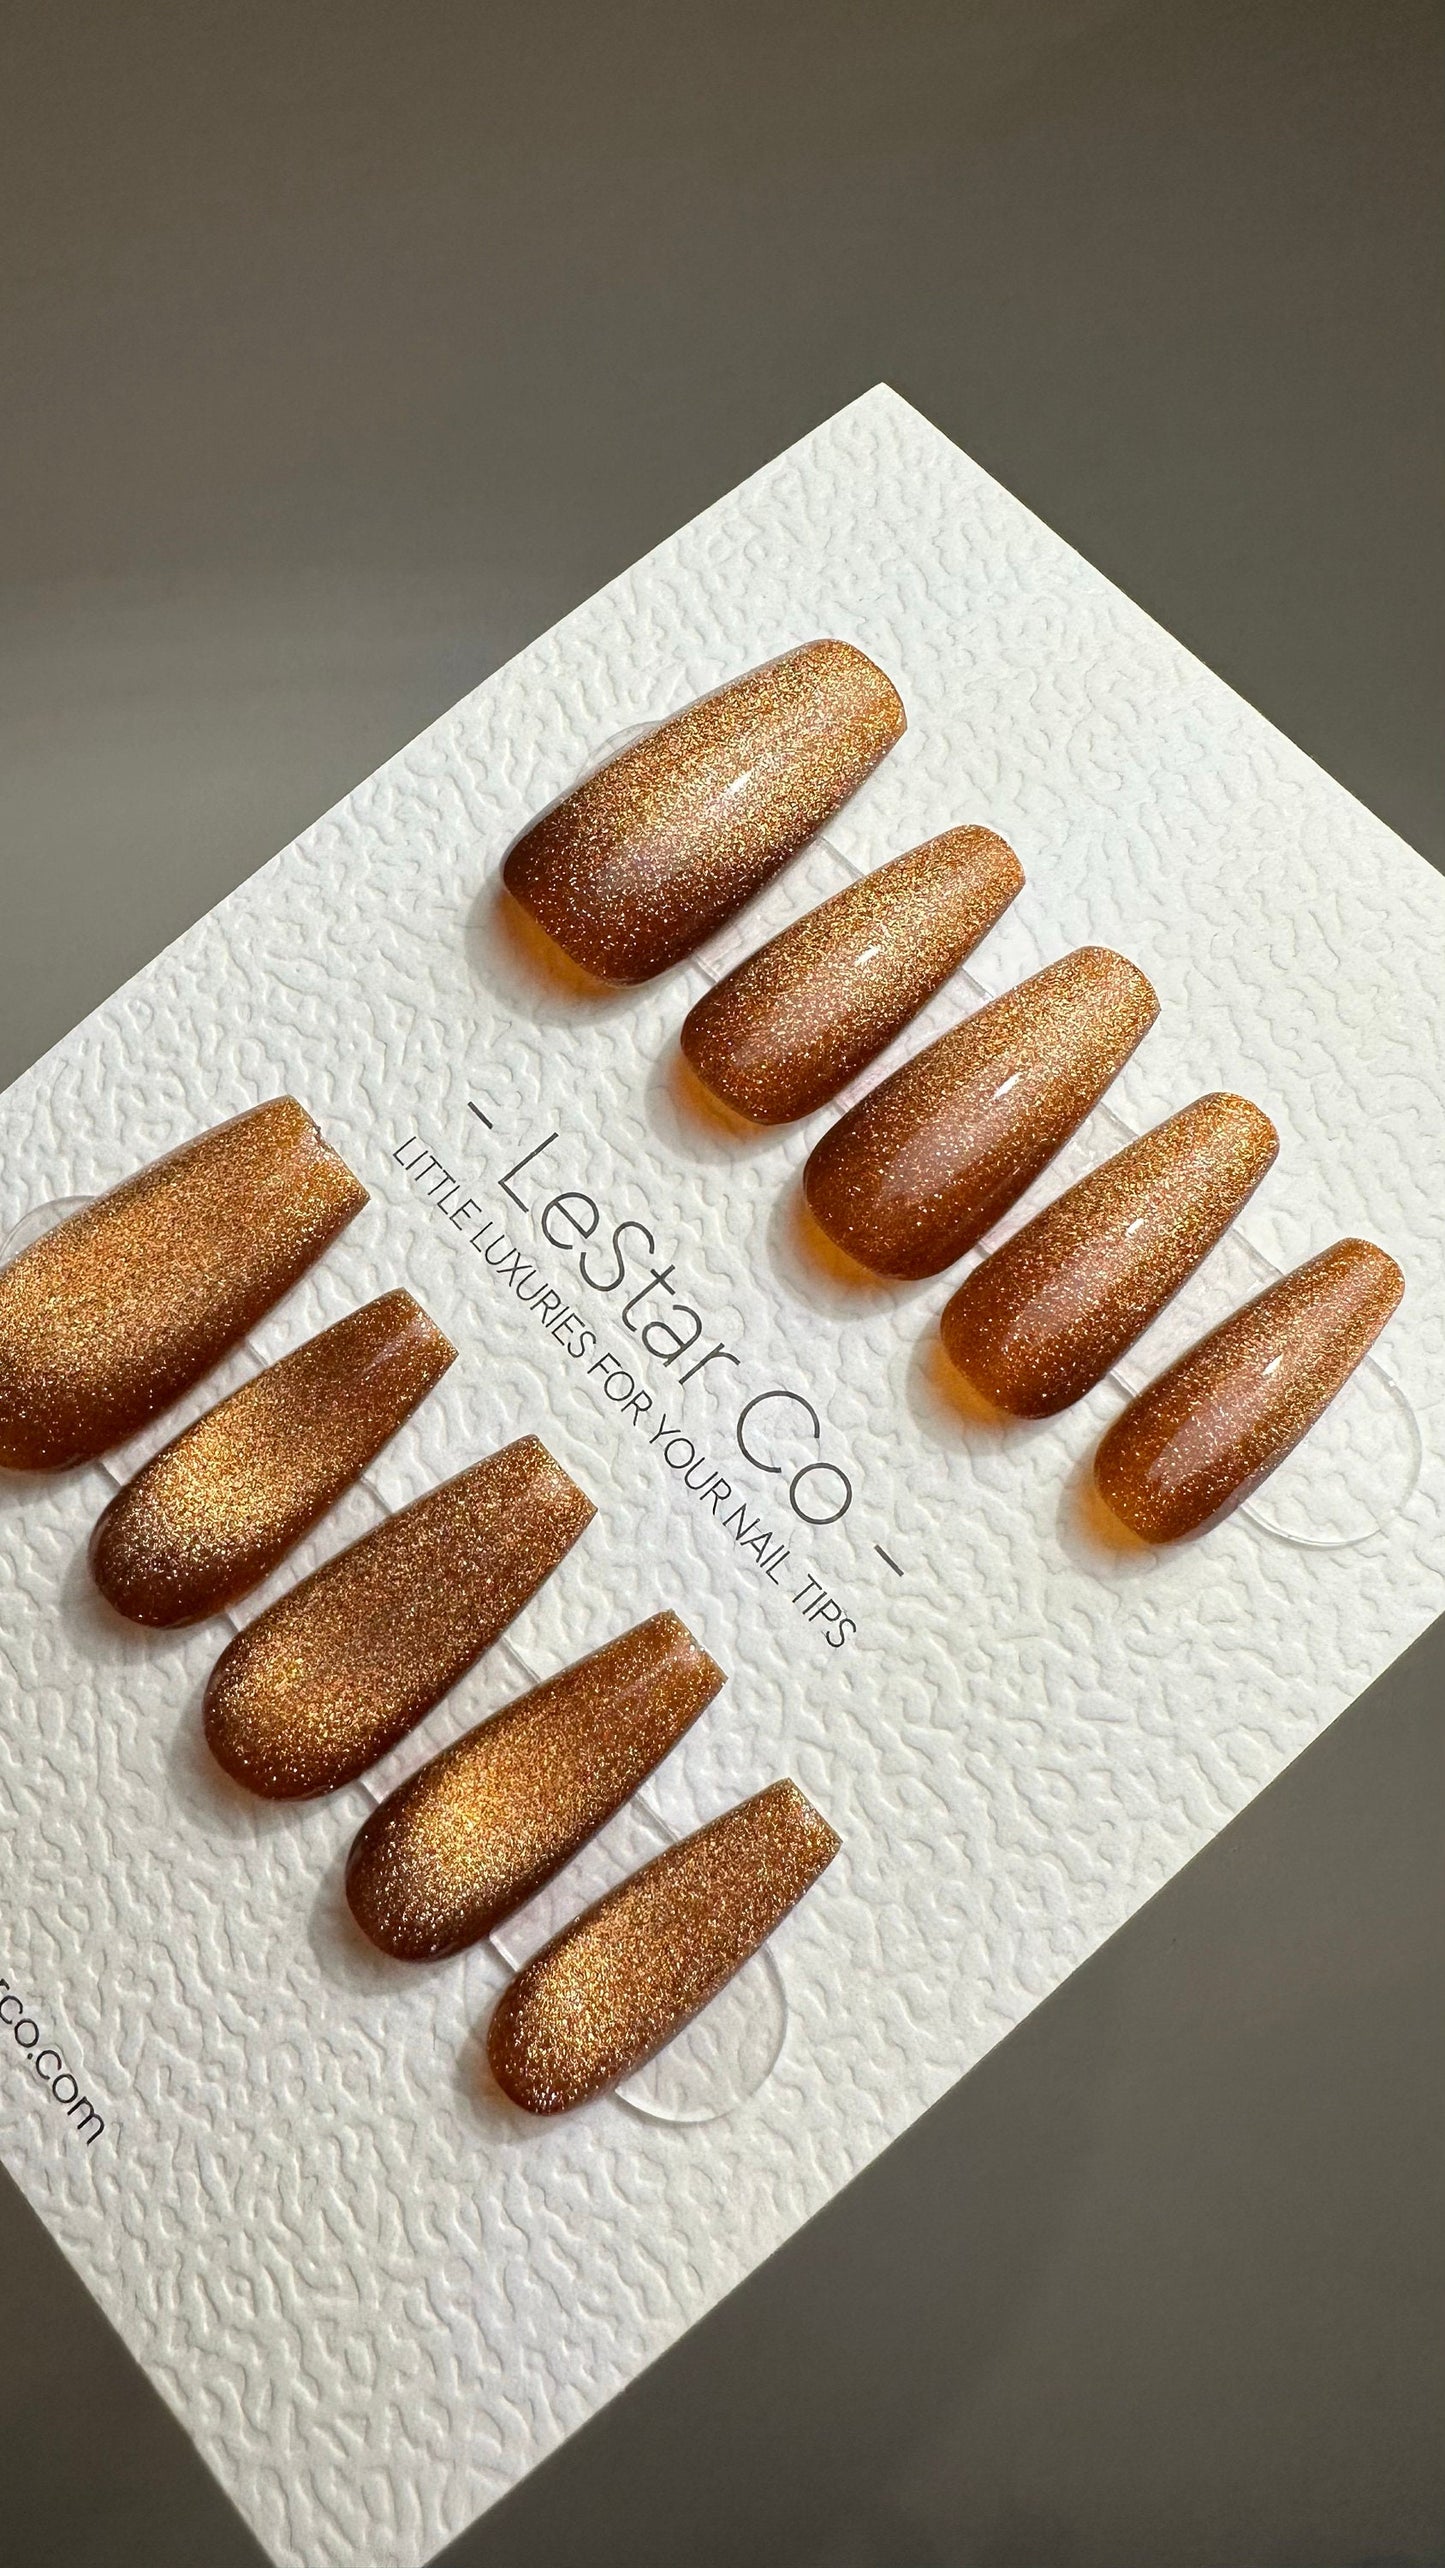 Reusable Sparkling Amber Cat eye | Nails Premium Press on Nails Gel Manicure | Fake Nails | Handmade | Lestarco faux nails TMR517